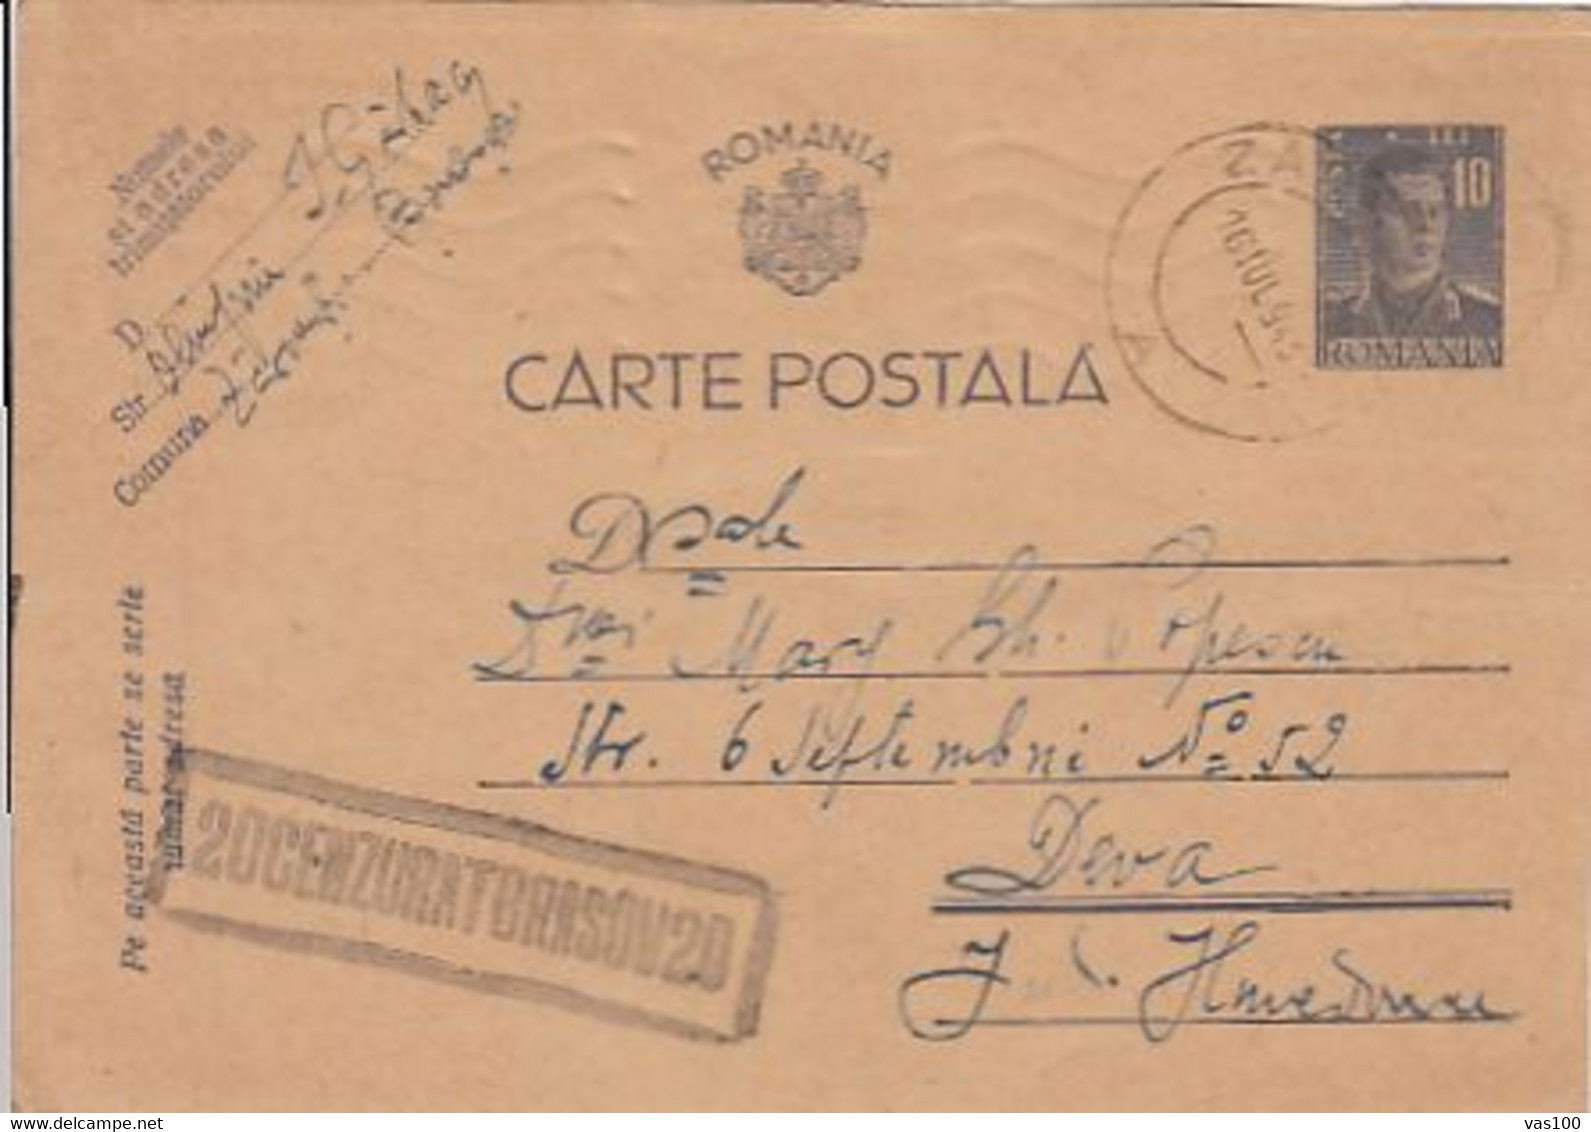 WW2 LETTERS, CENSORED BRASOV NR 20, KING MICHAEL PC STATIONERY, ENTIER POSTAL, 1943, ROMANIA - Lettres 2ème Guerre Mondiale